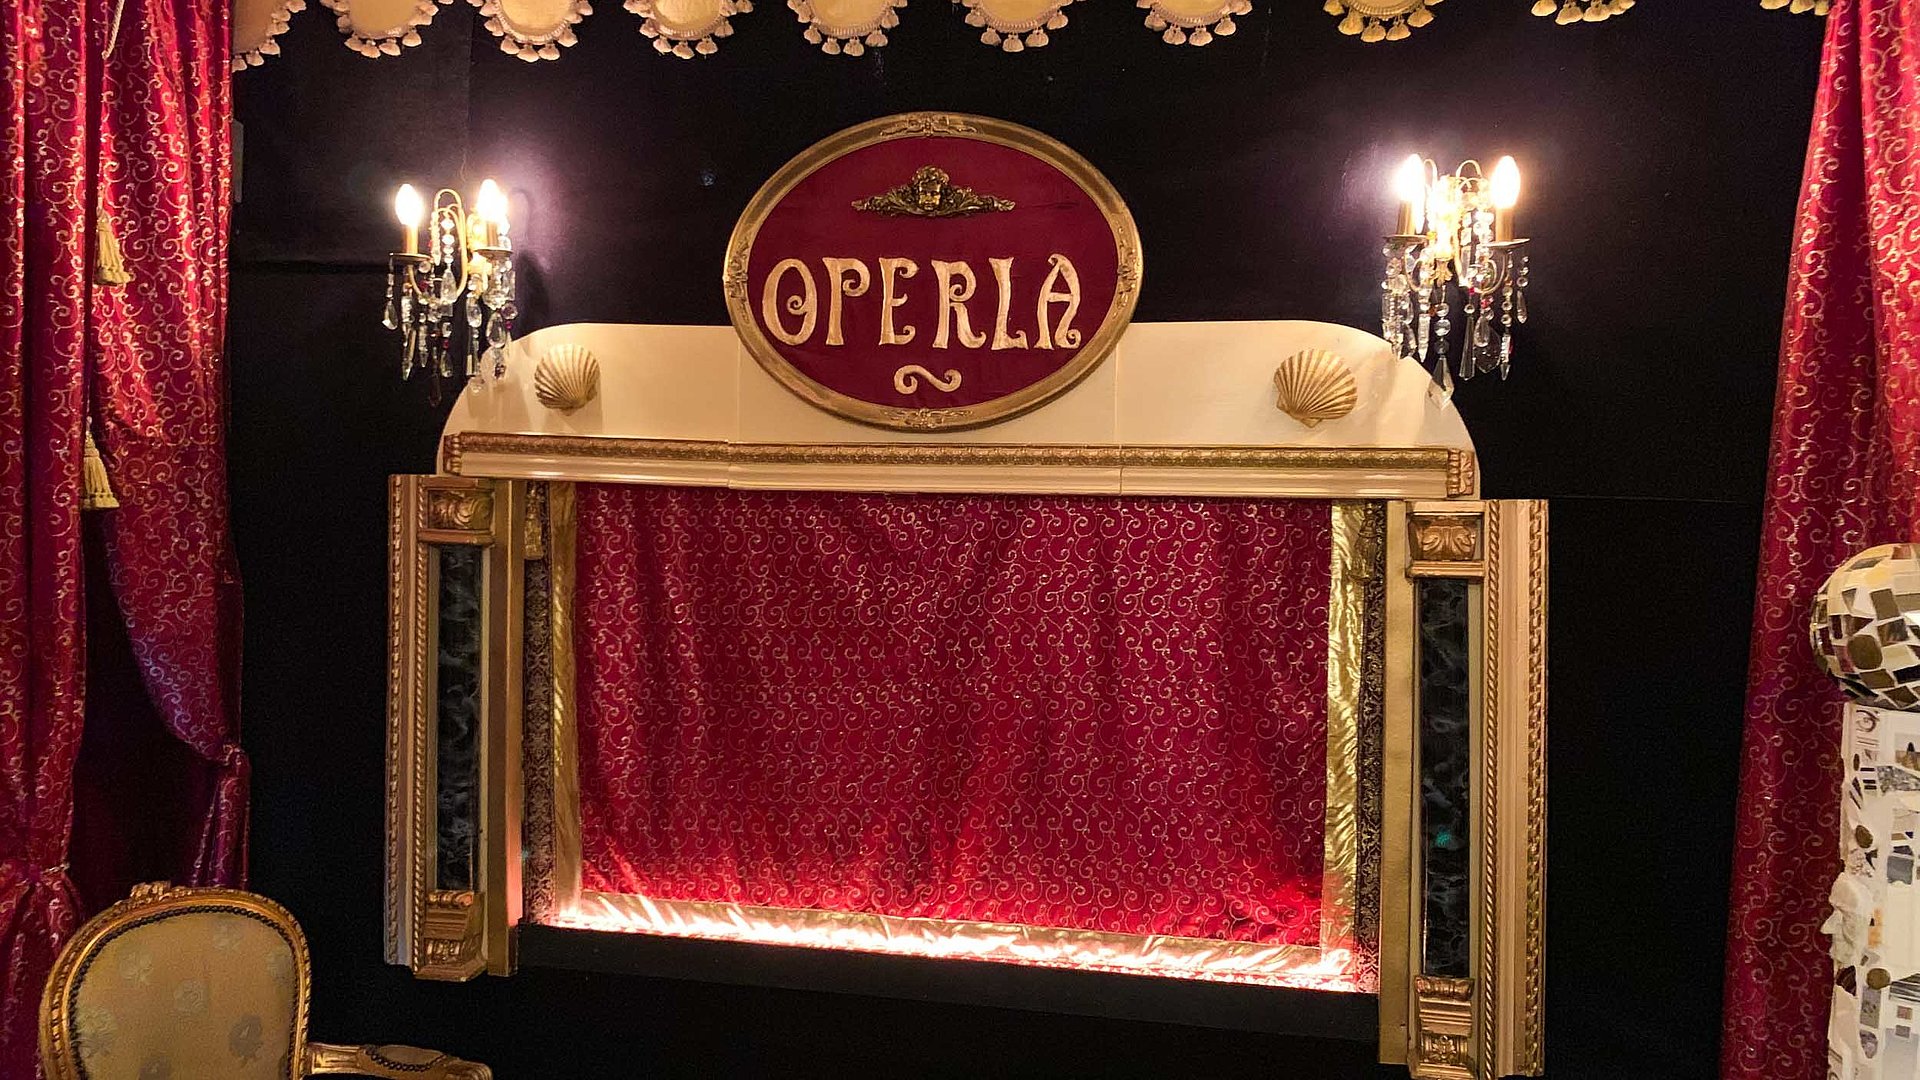 Marionettentheater Operla in Bayreuth